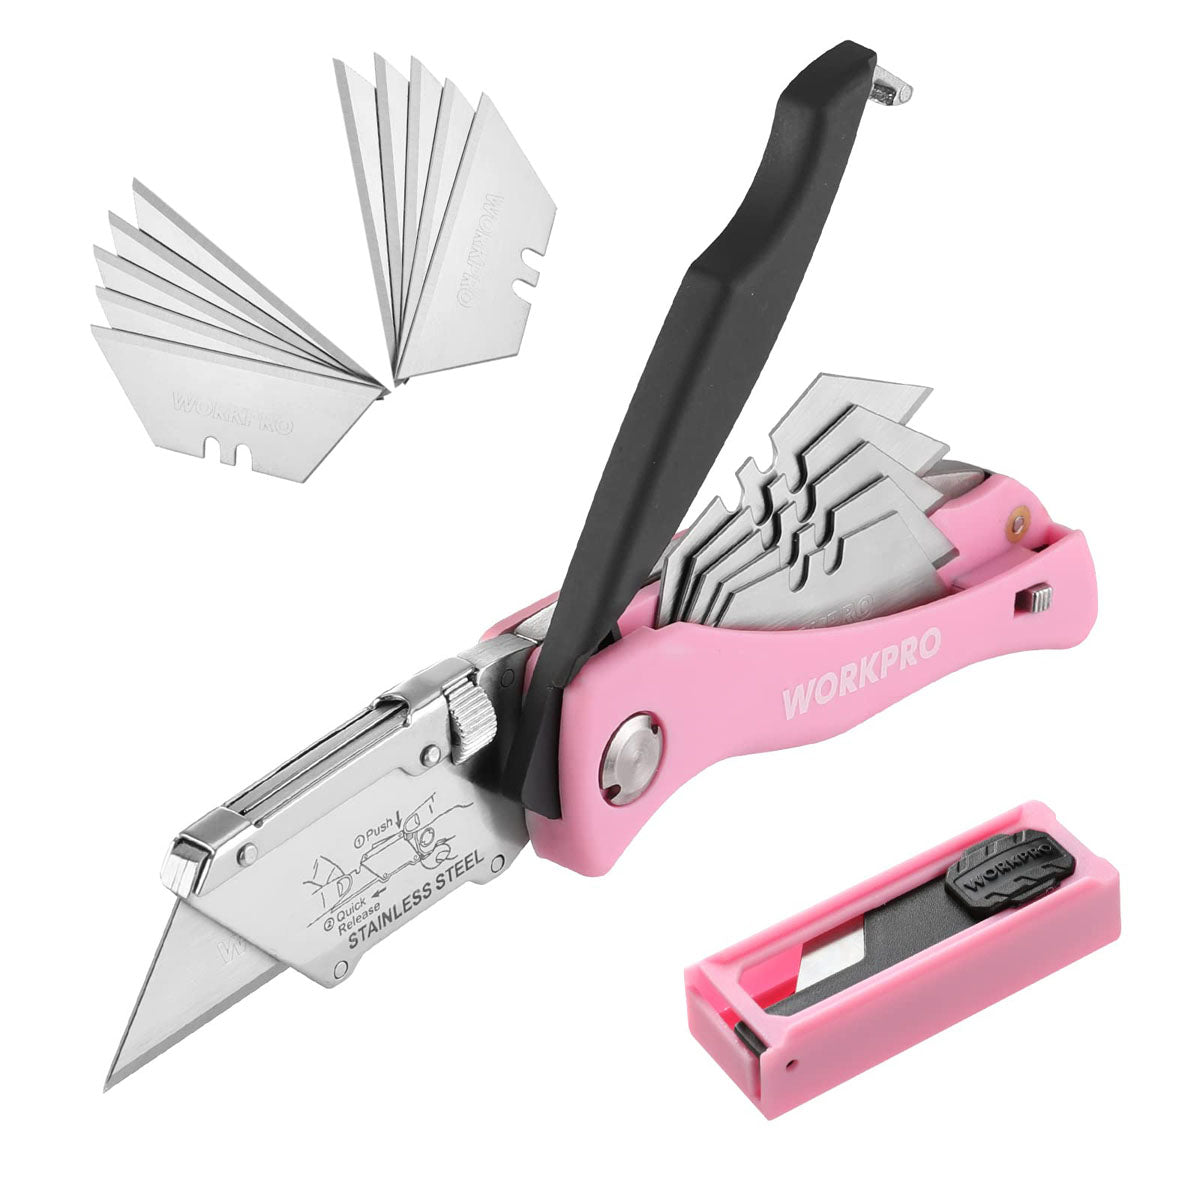 WORKPRO Utility Knife Blades, SK5 Steel Box Cutter Blades Refills, St